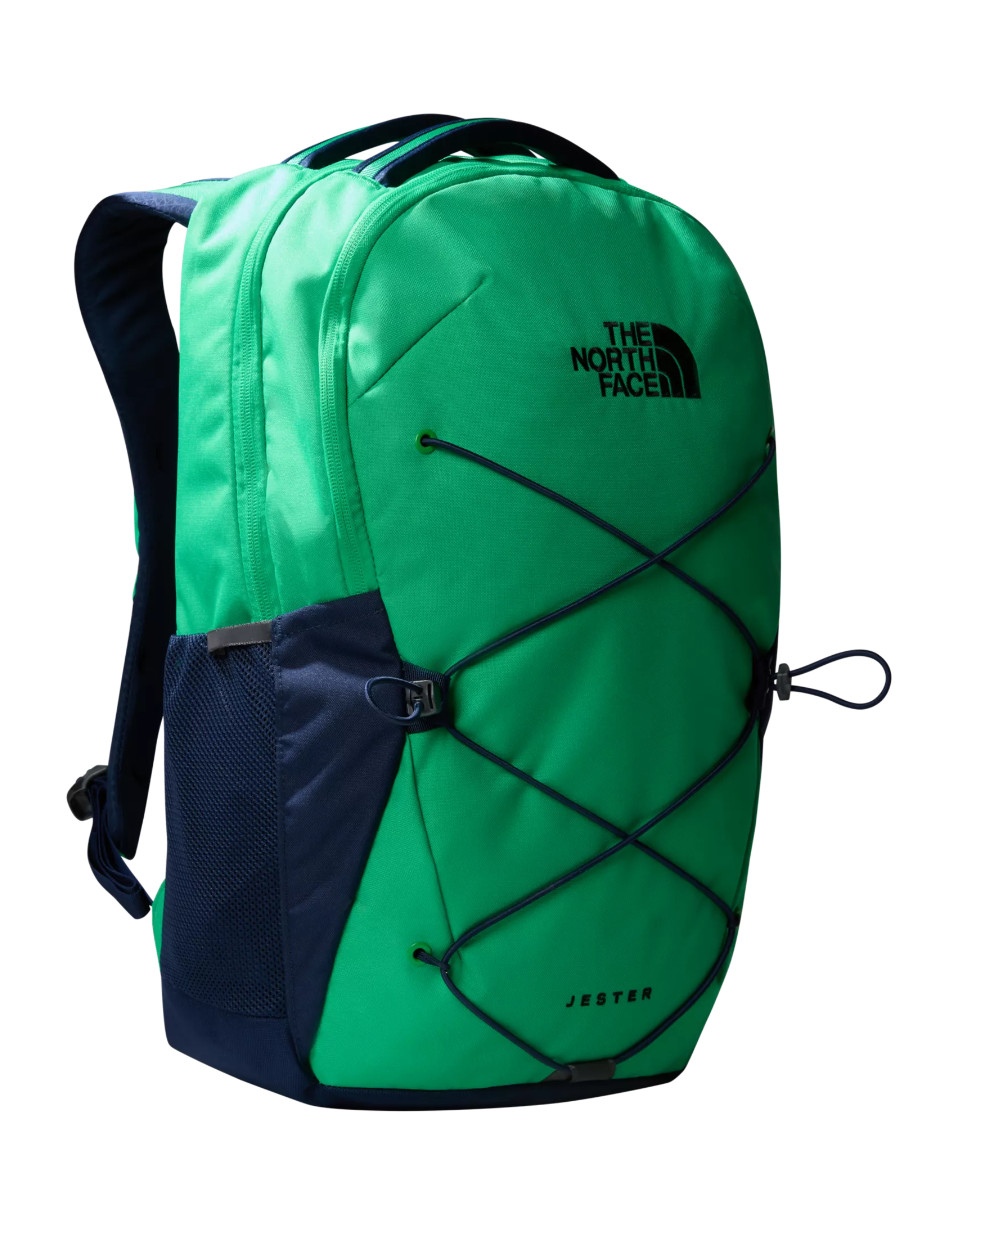  The North Face Zaino Bag Backpack Verde poliestere Trekking JESTER Unisex